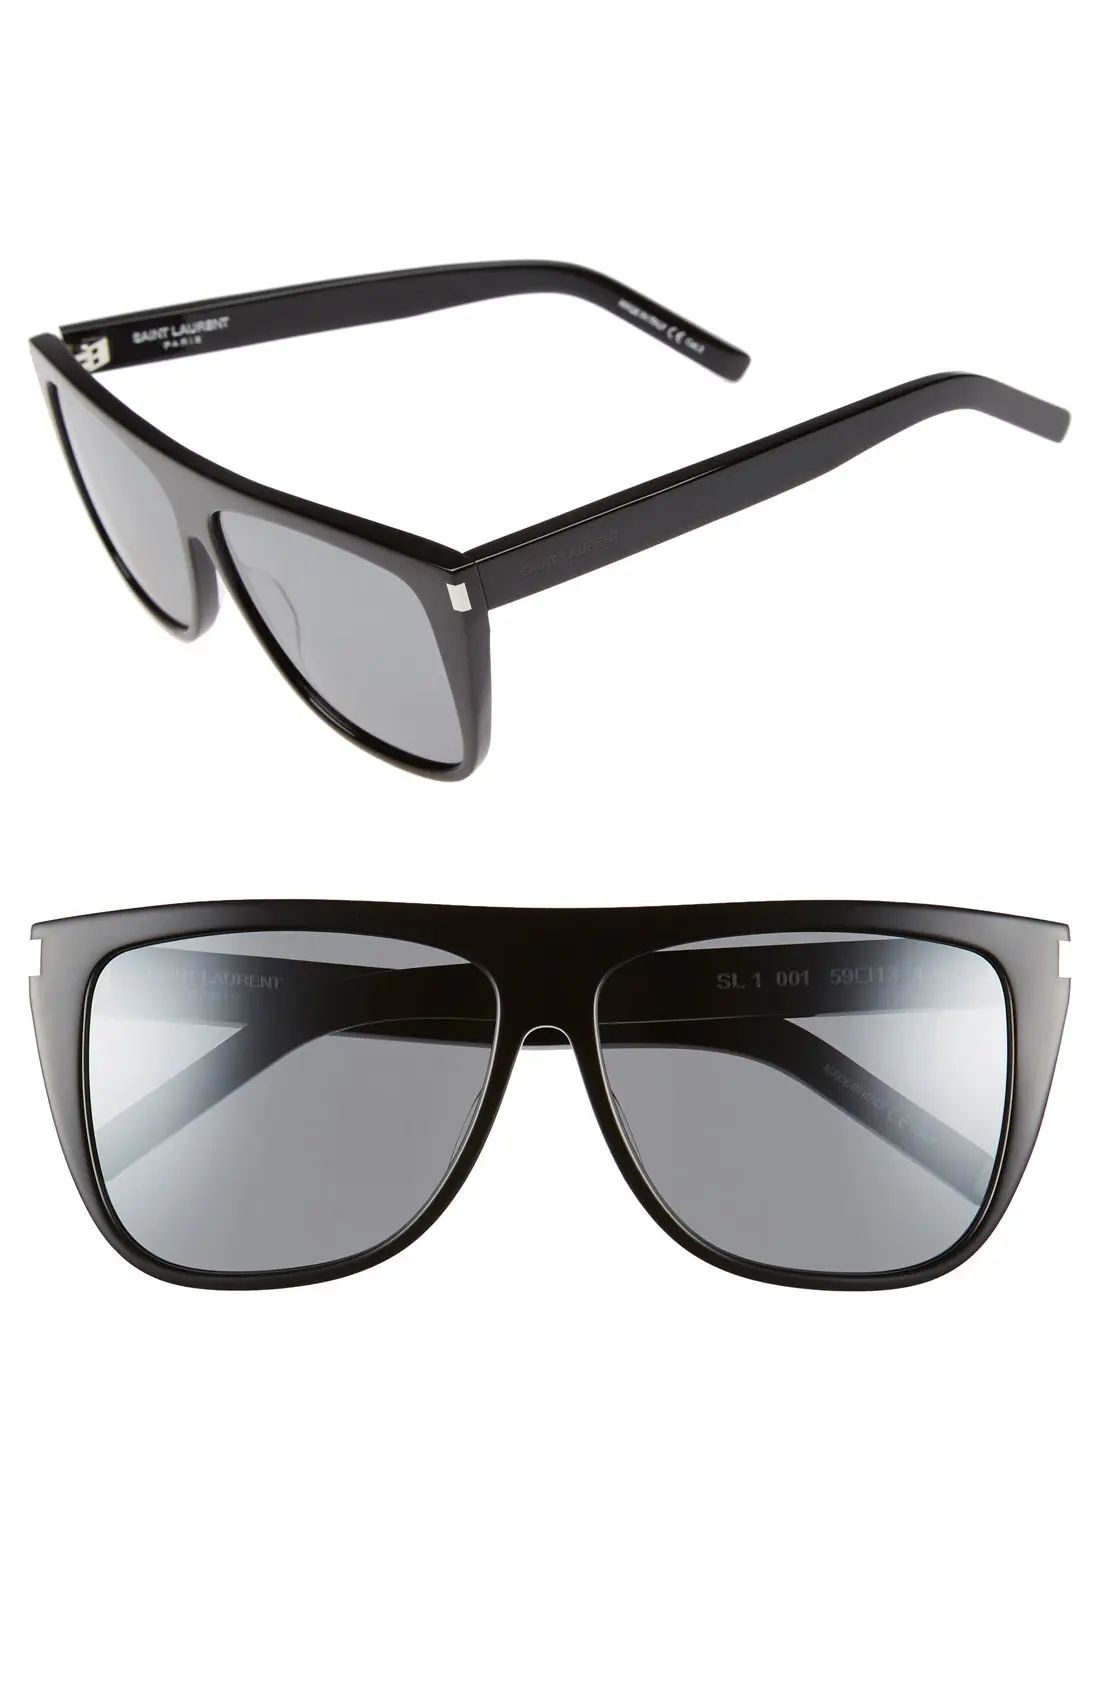 Saint Laurent SL1 59mm Flat Top Sunglasses | Nordstrom